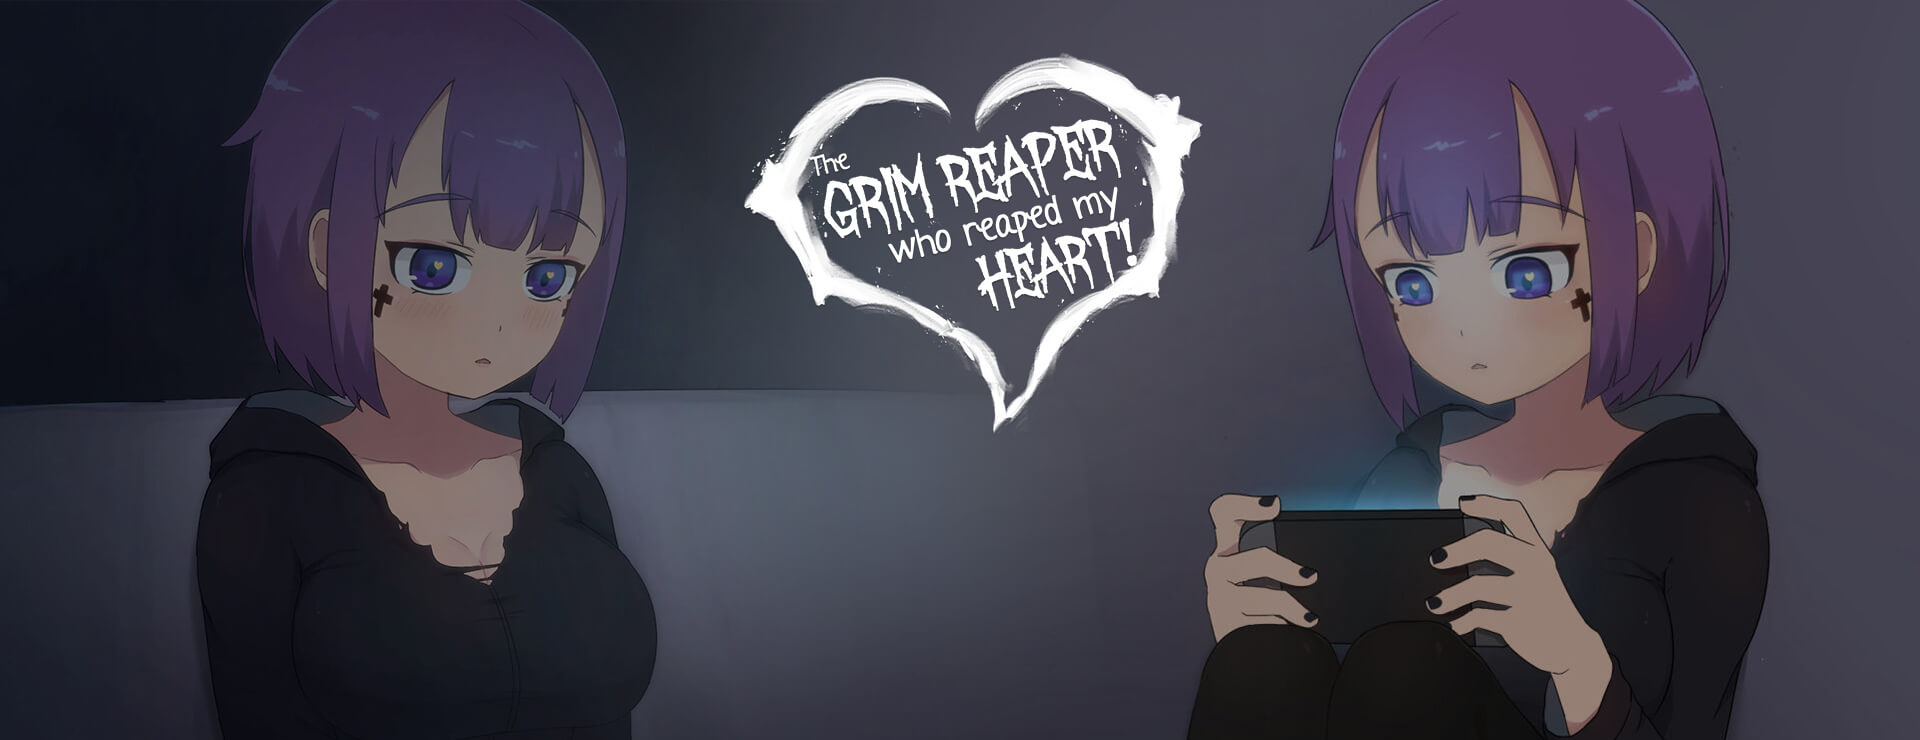 The Grim Reaper who Reaped my Heart! Swimsuit Version - Powieść wizualna Gra